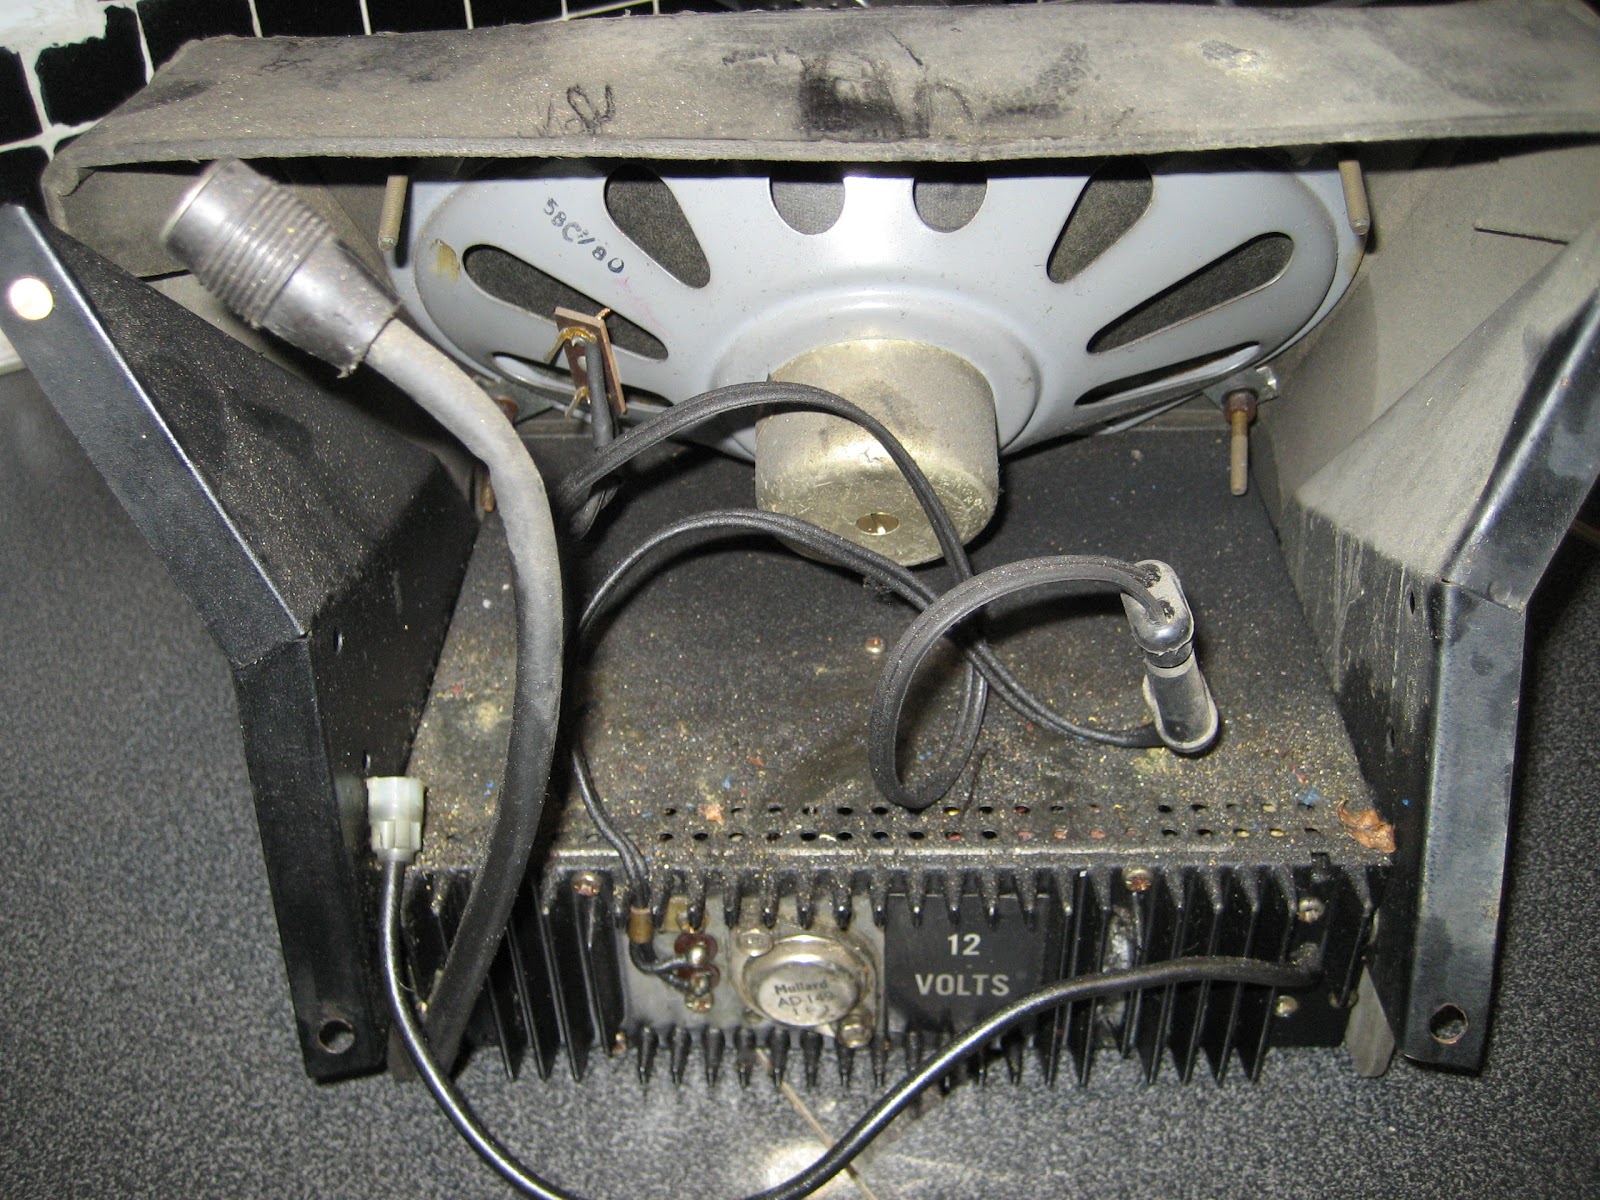 Austin Healey Sprite MK3 restoration: Cleaning and verifying the radio